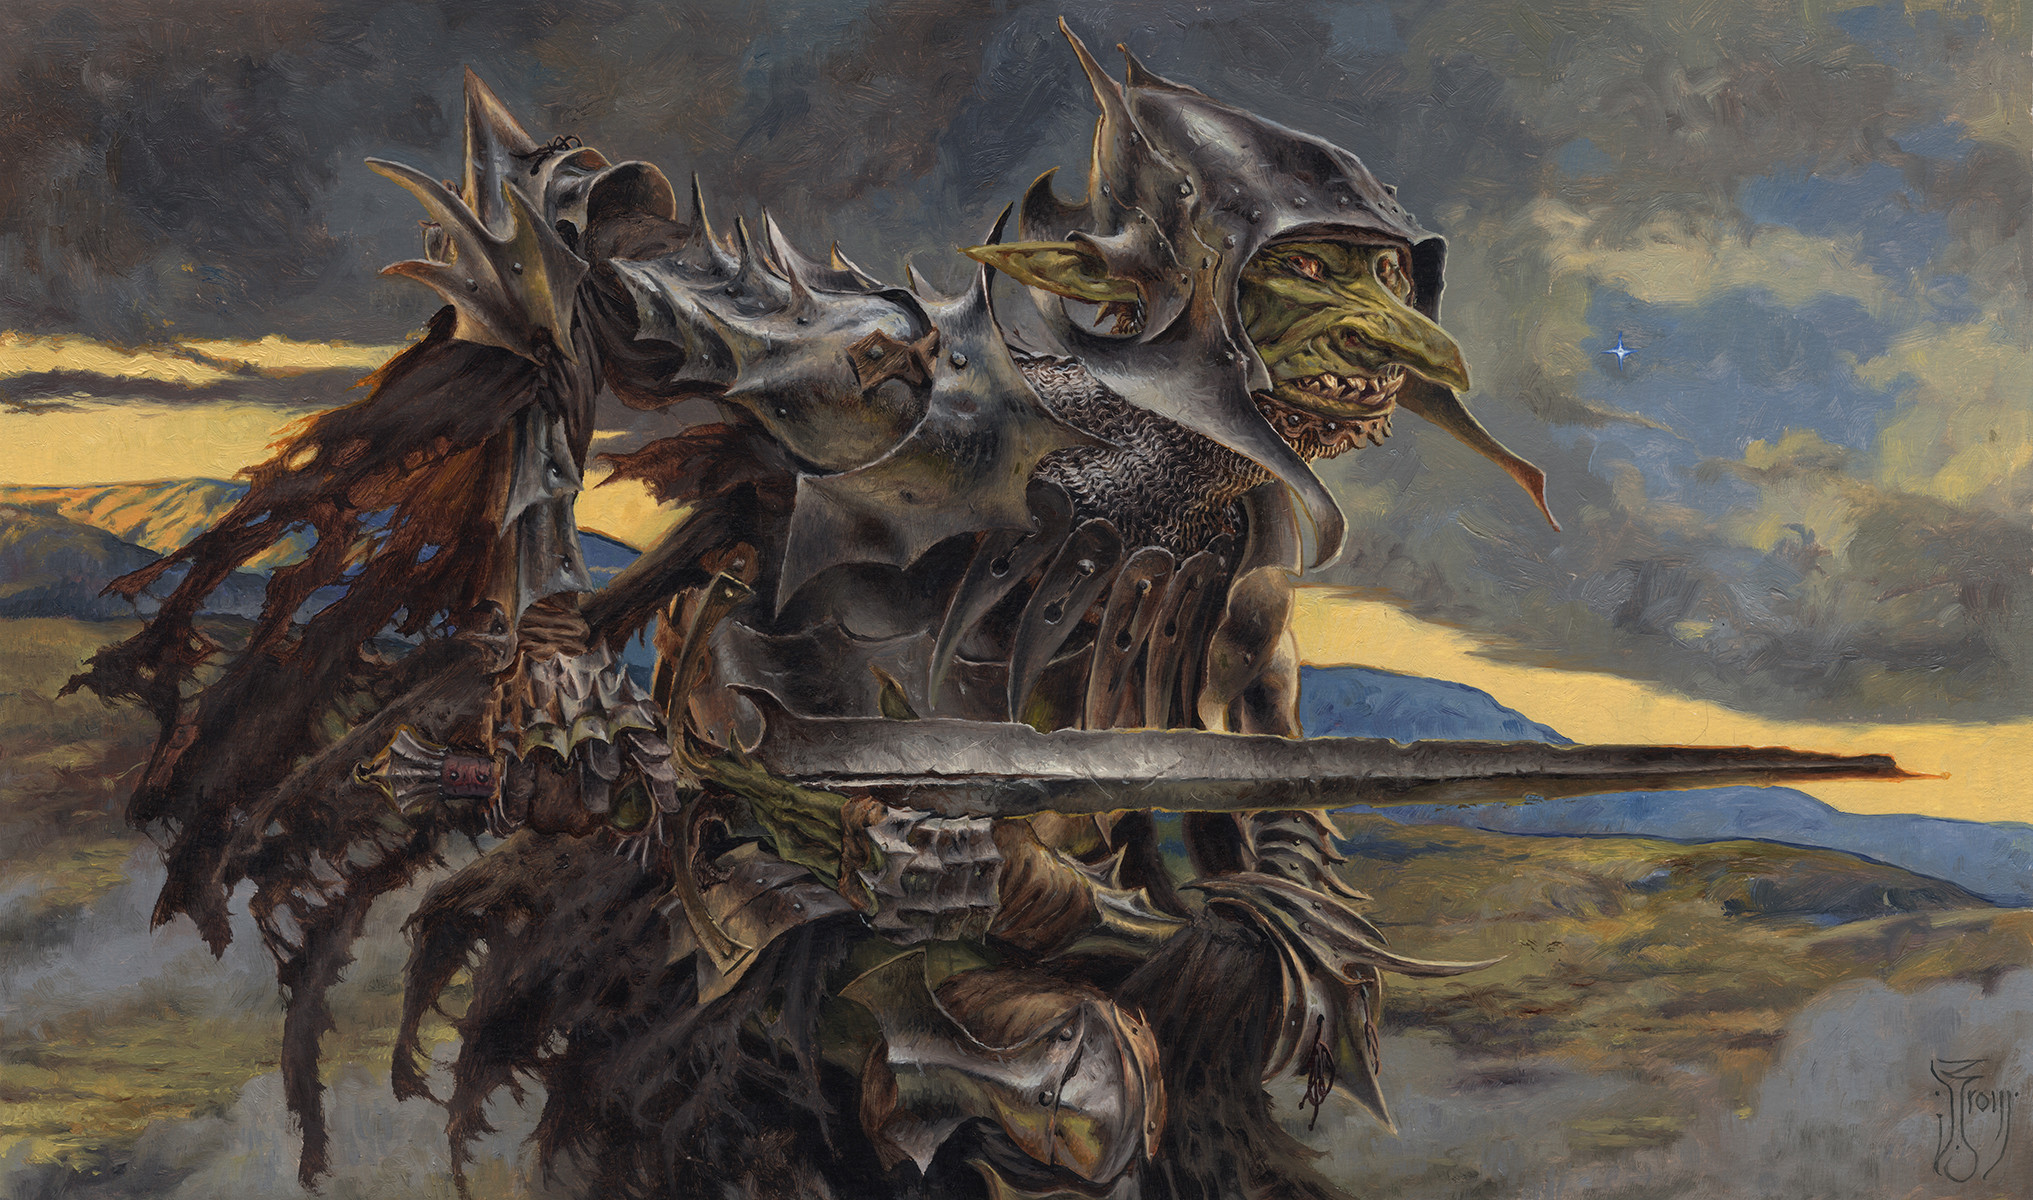 The Goblin Knight by Daniel Zrom